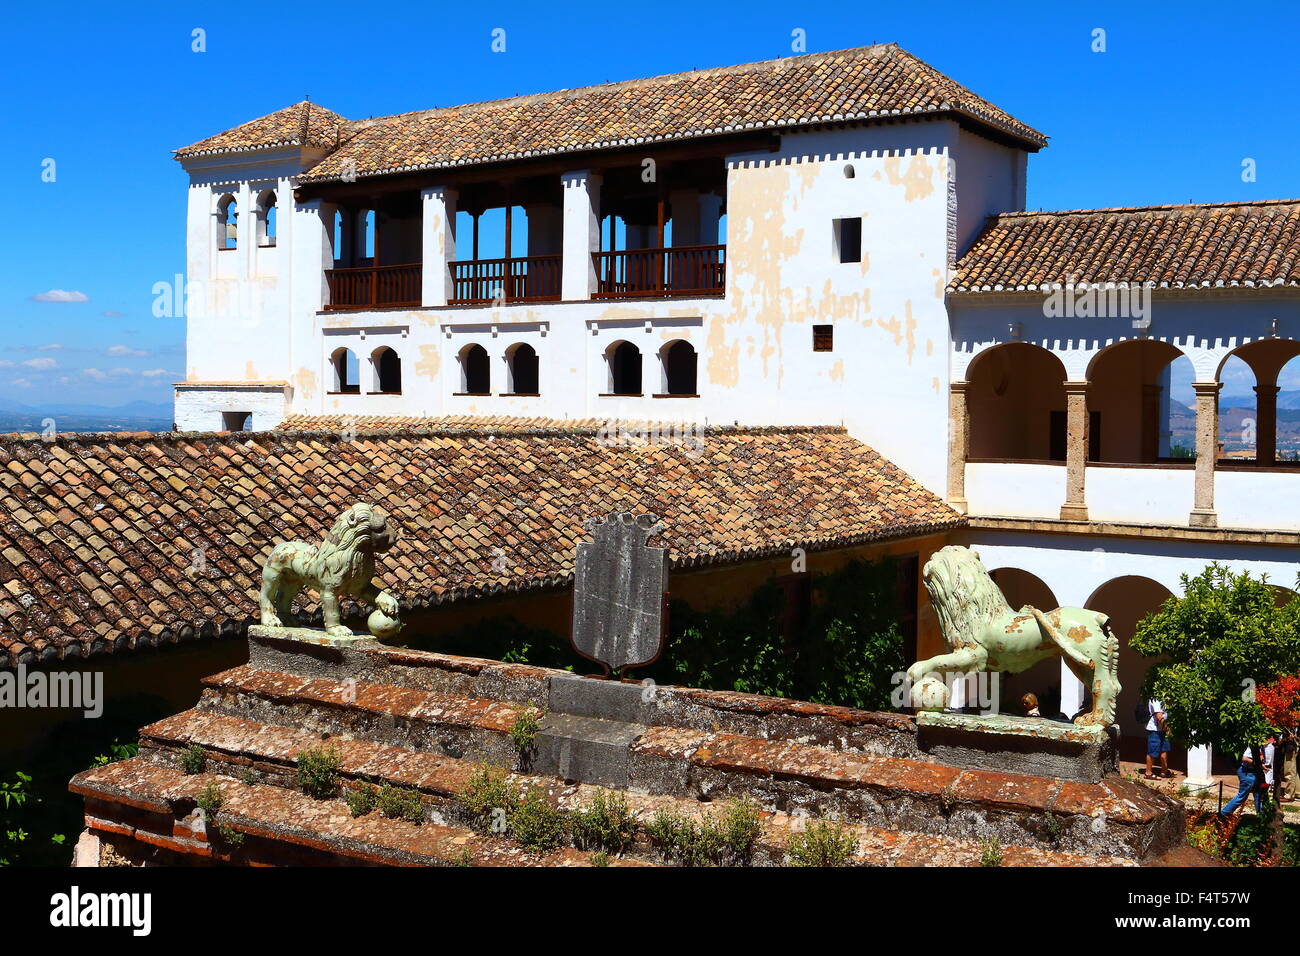 Generalife palace in the Alhambra, Granada. Stock Photo